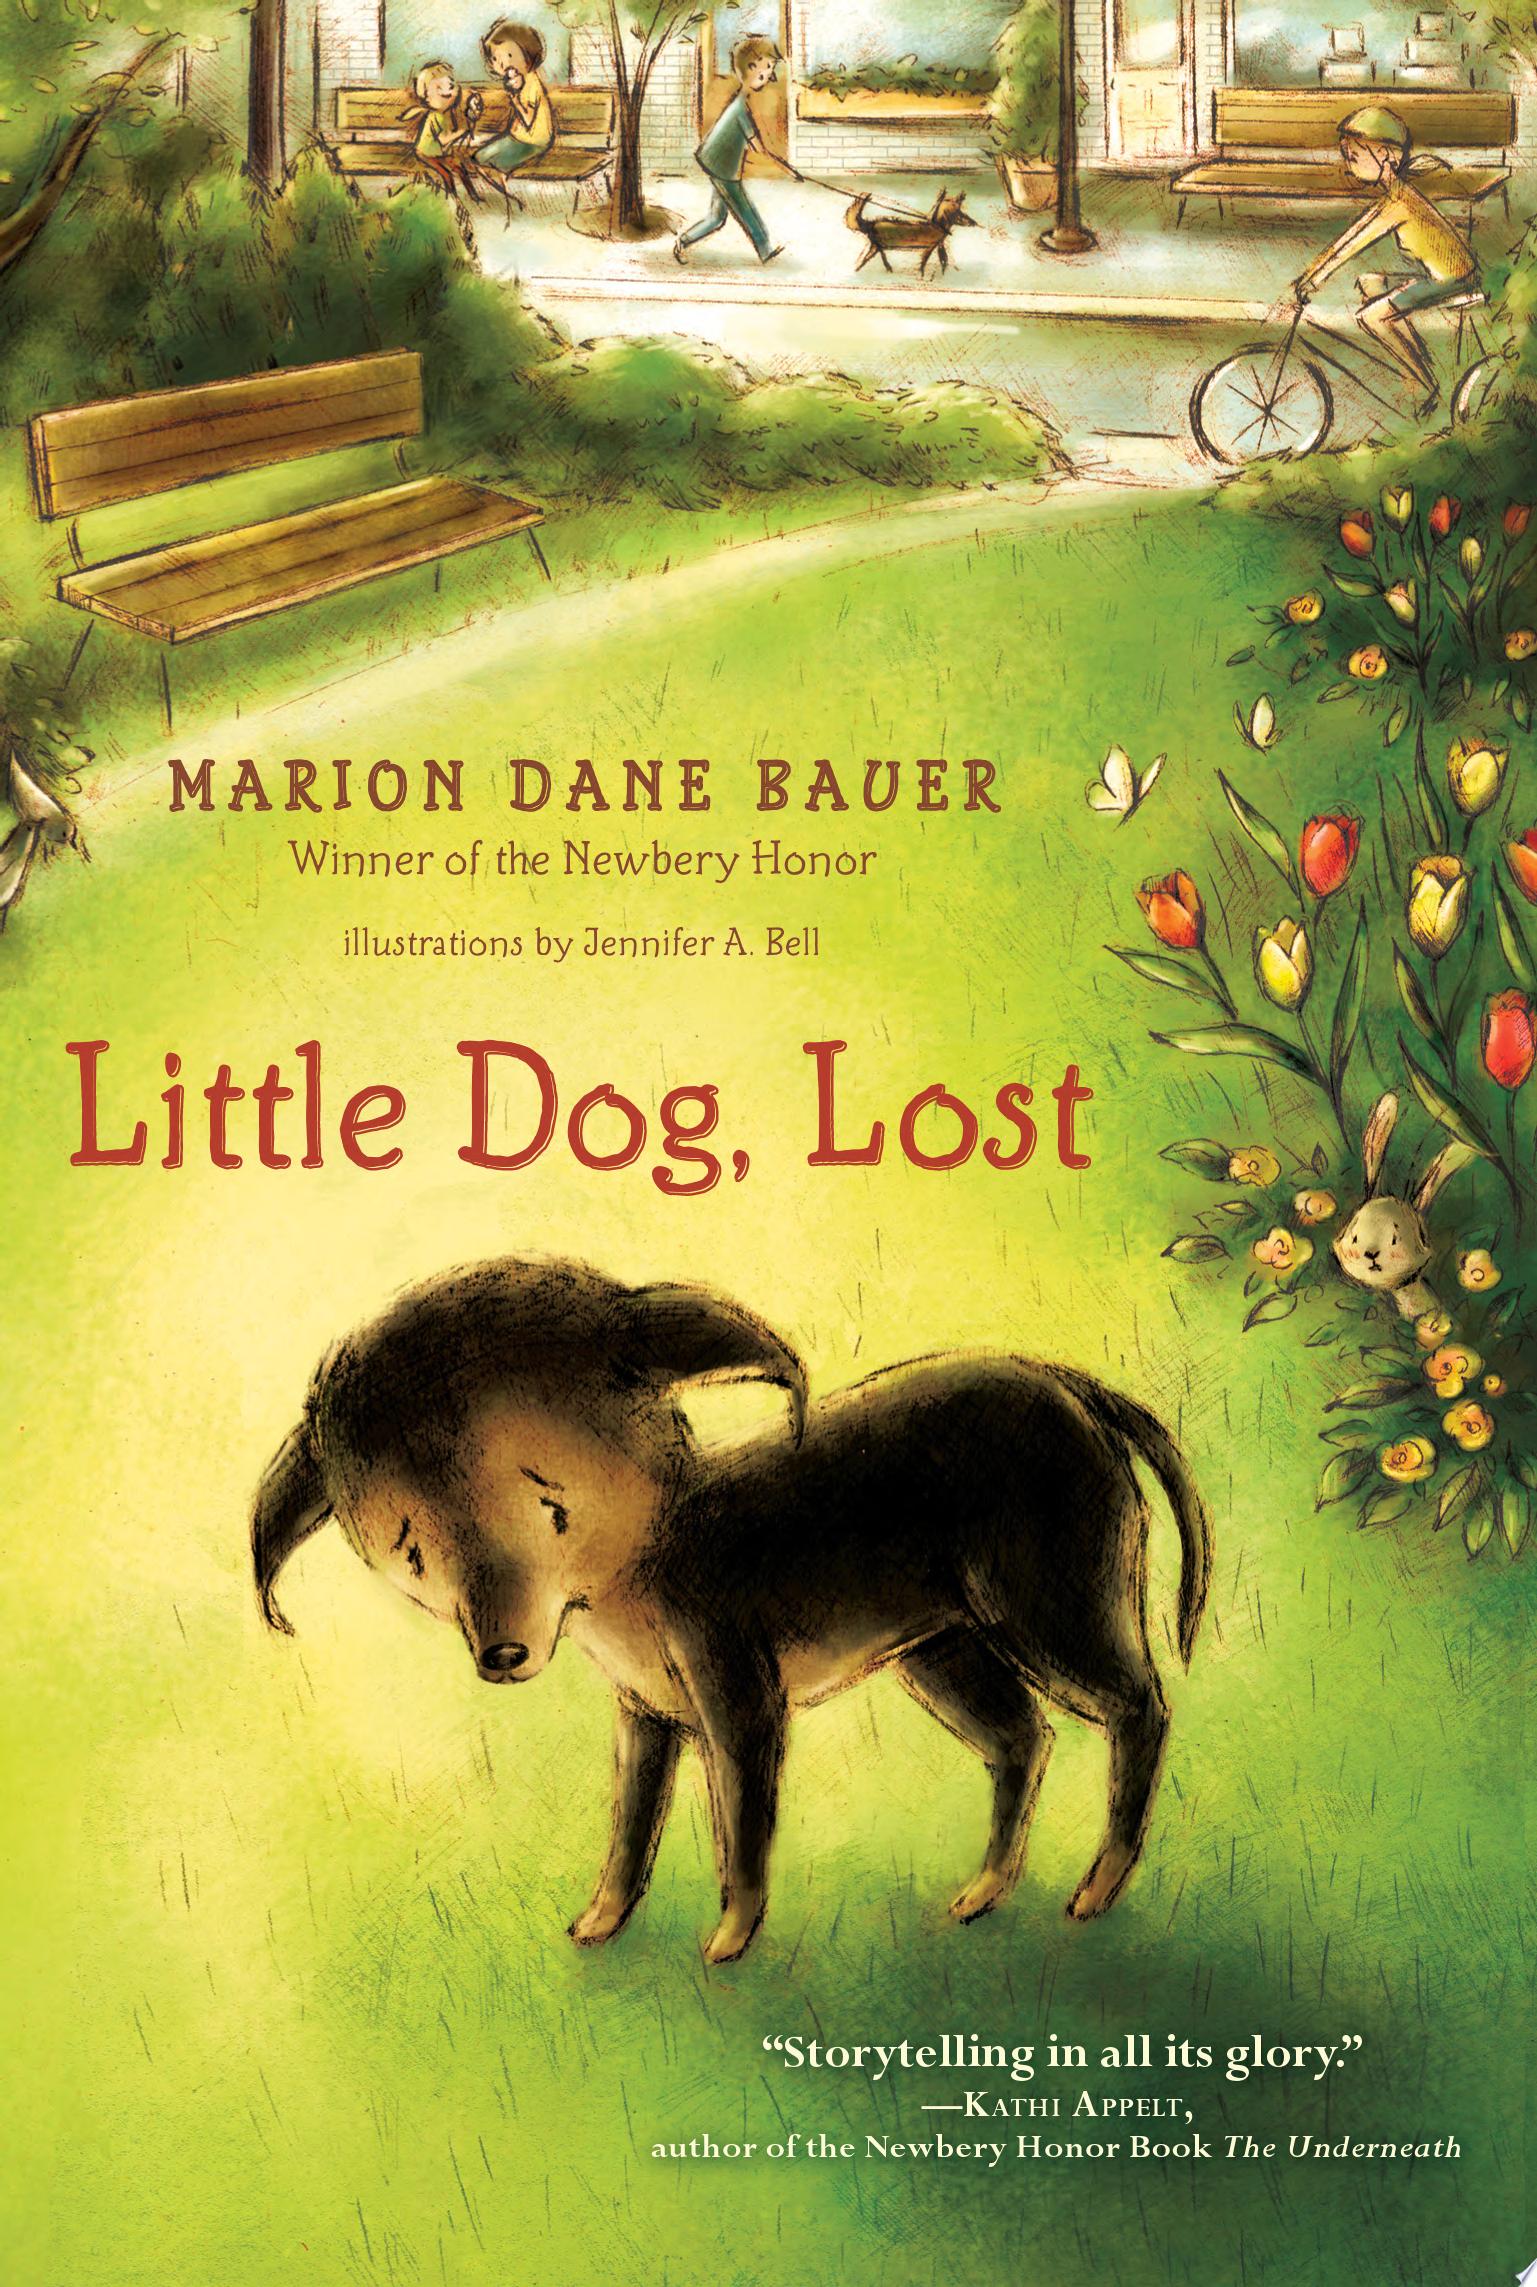 Image for "Little Dog, Lost"